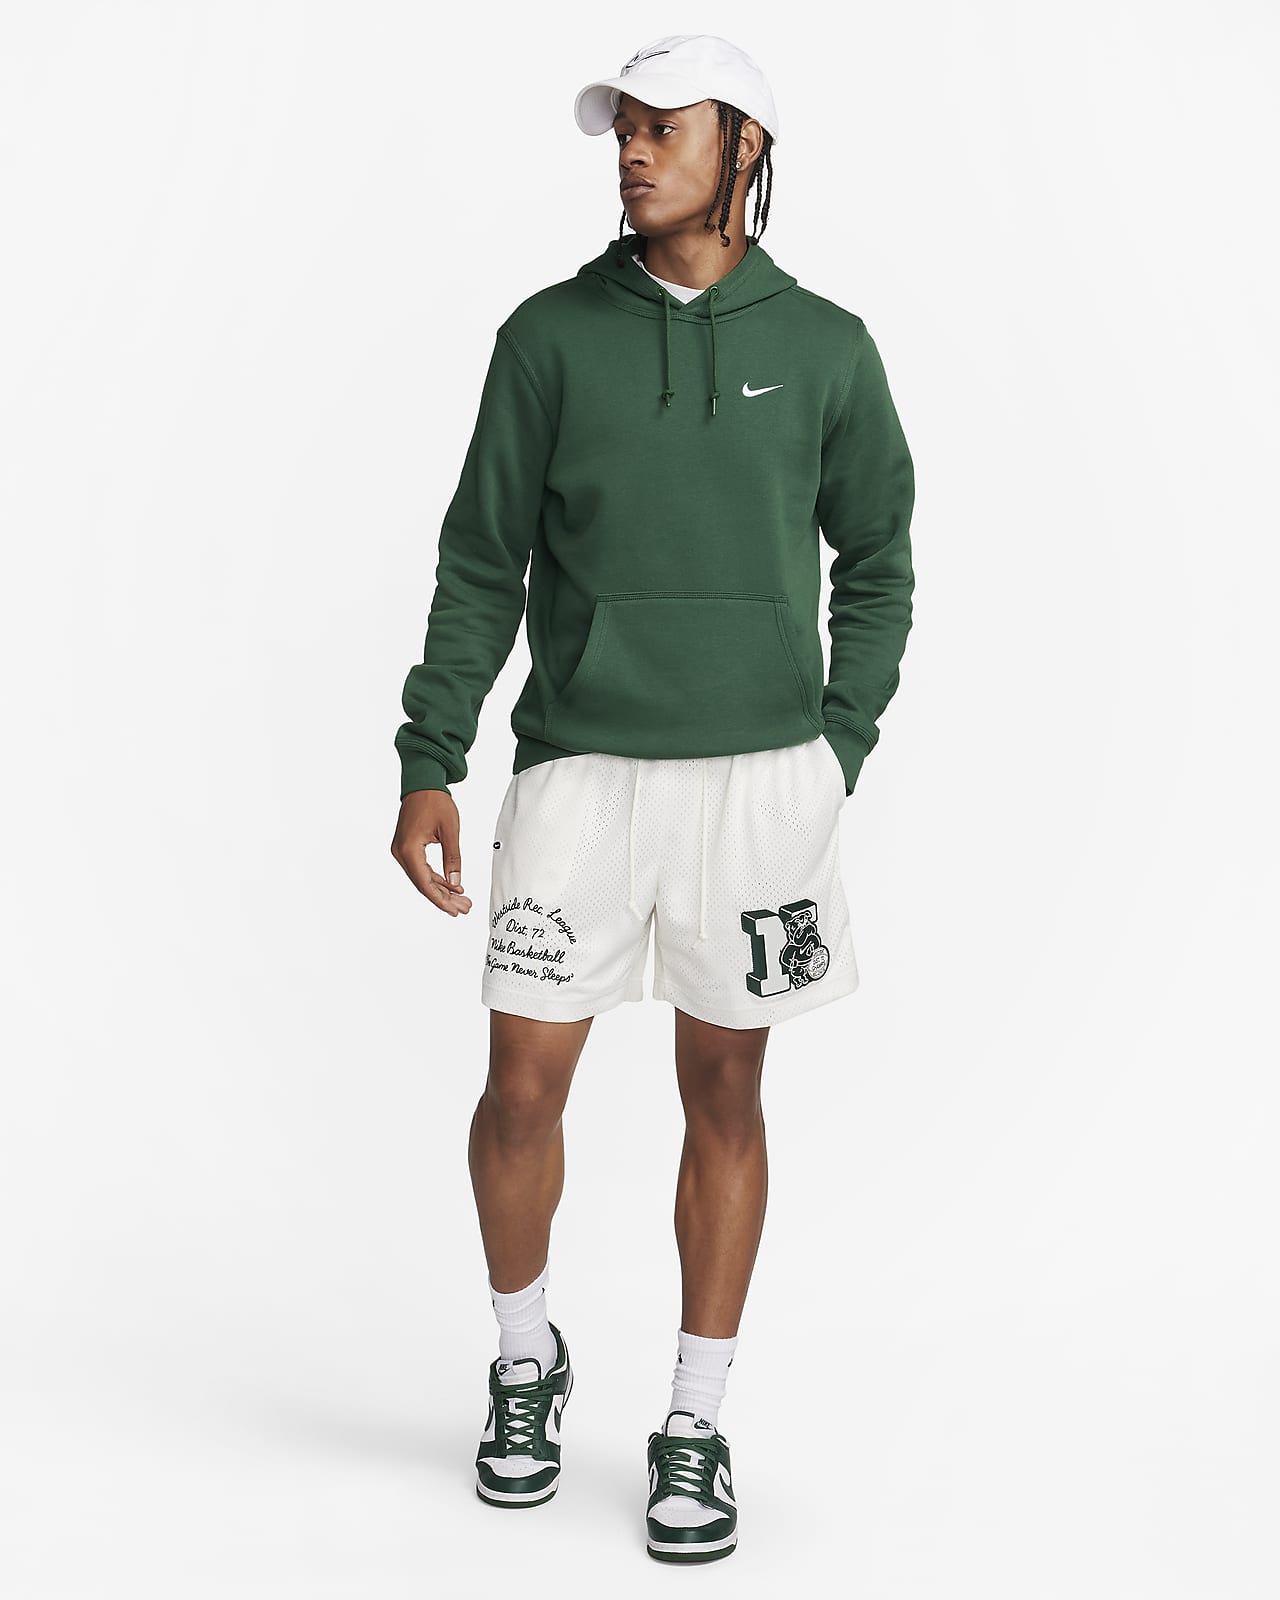 Nike Authentics Men\'s Mesh Shorts.